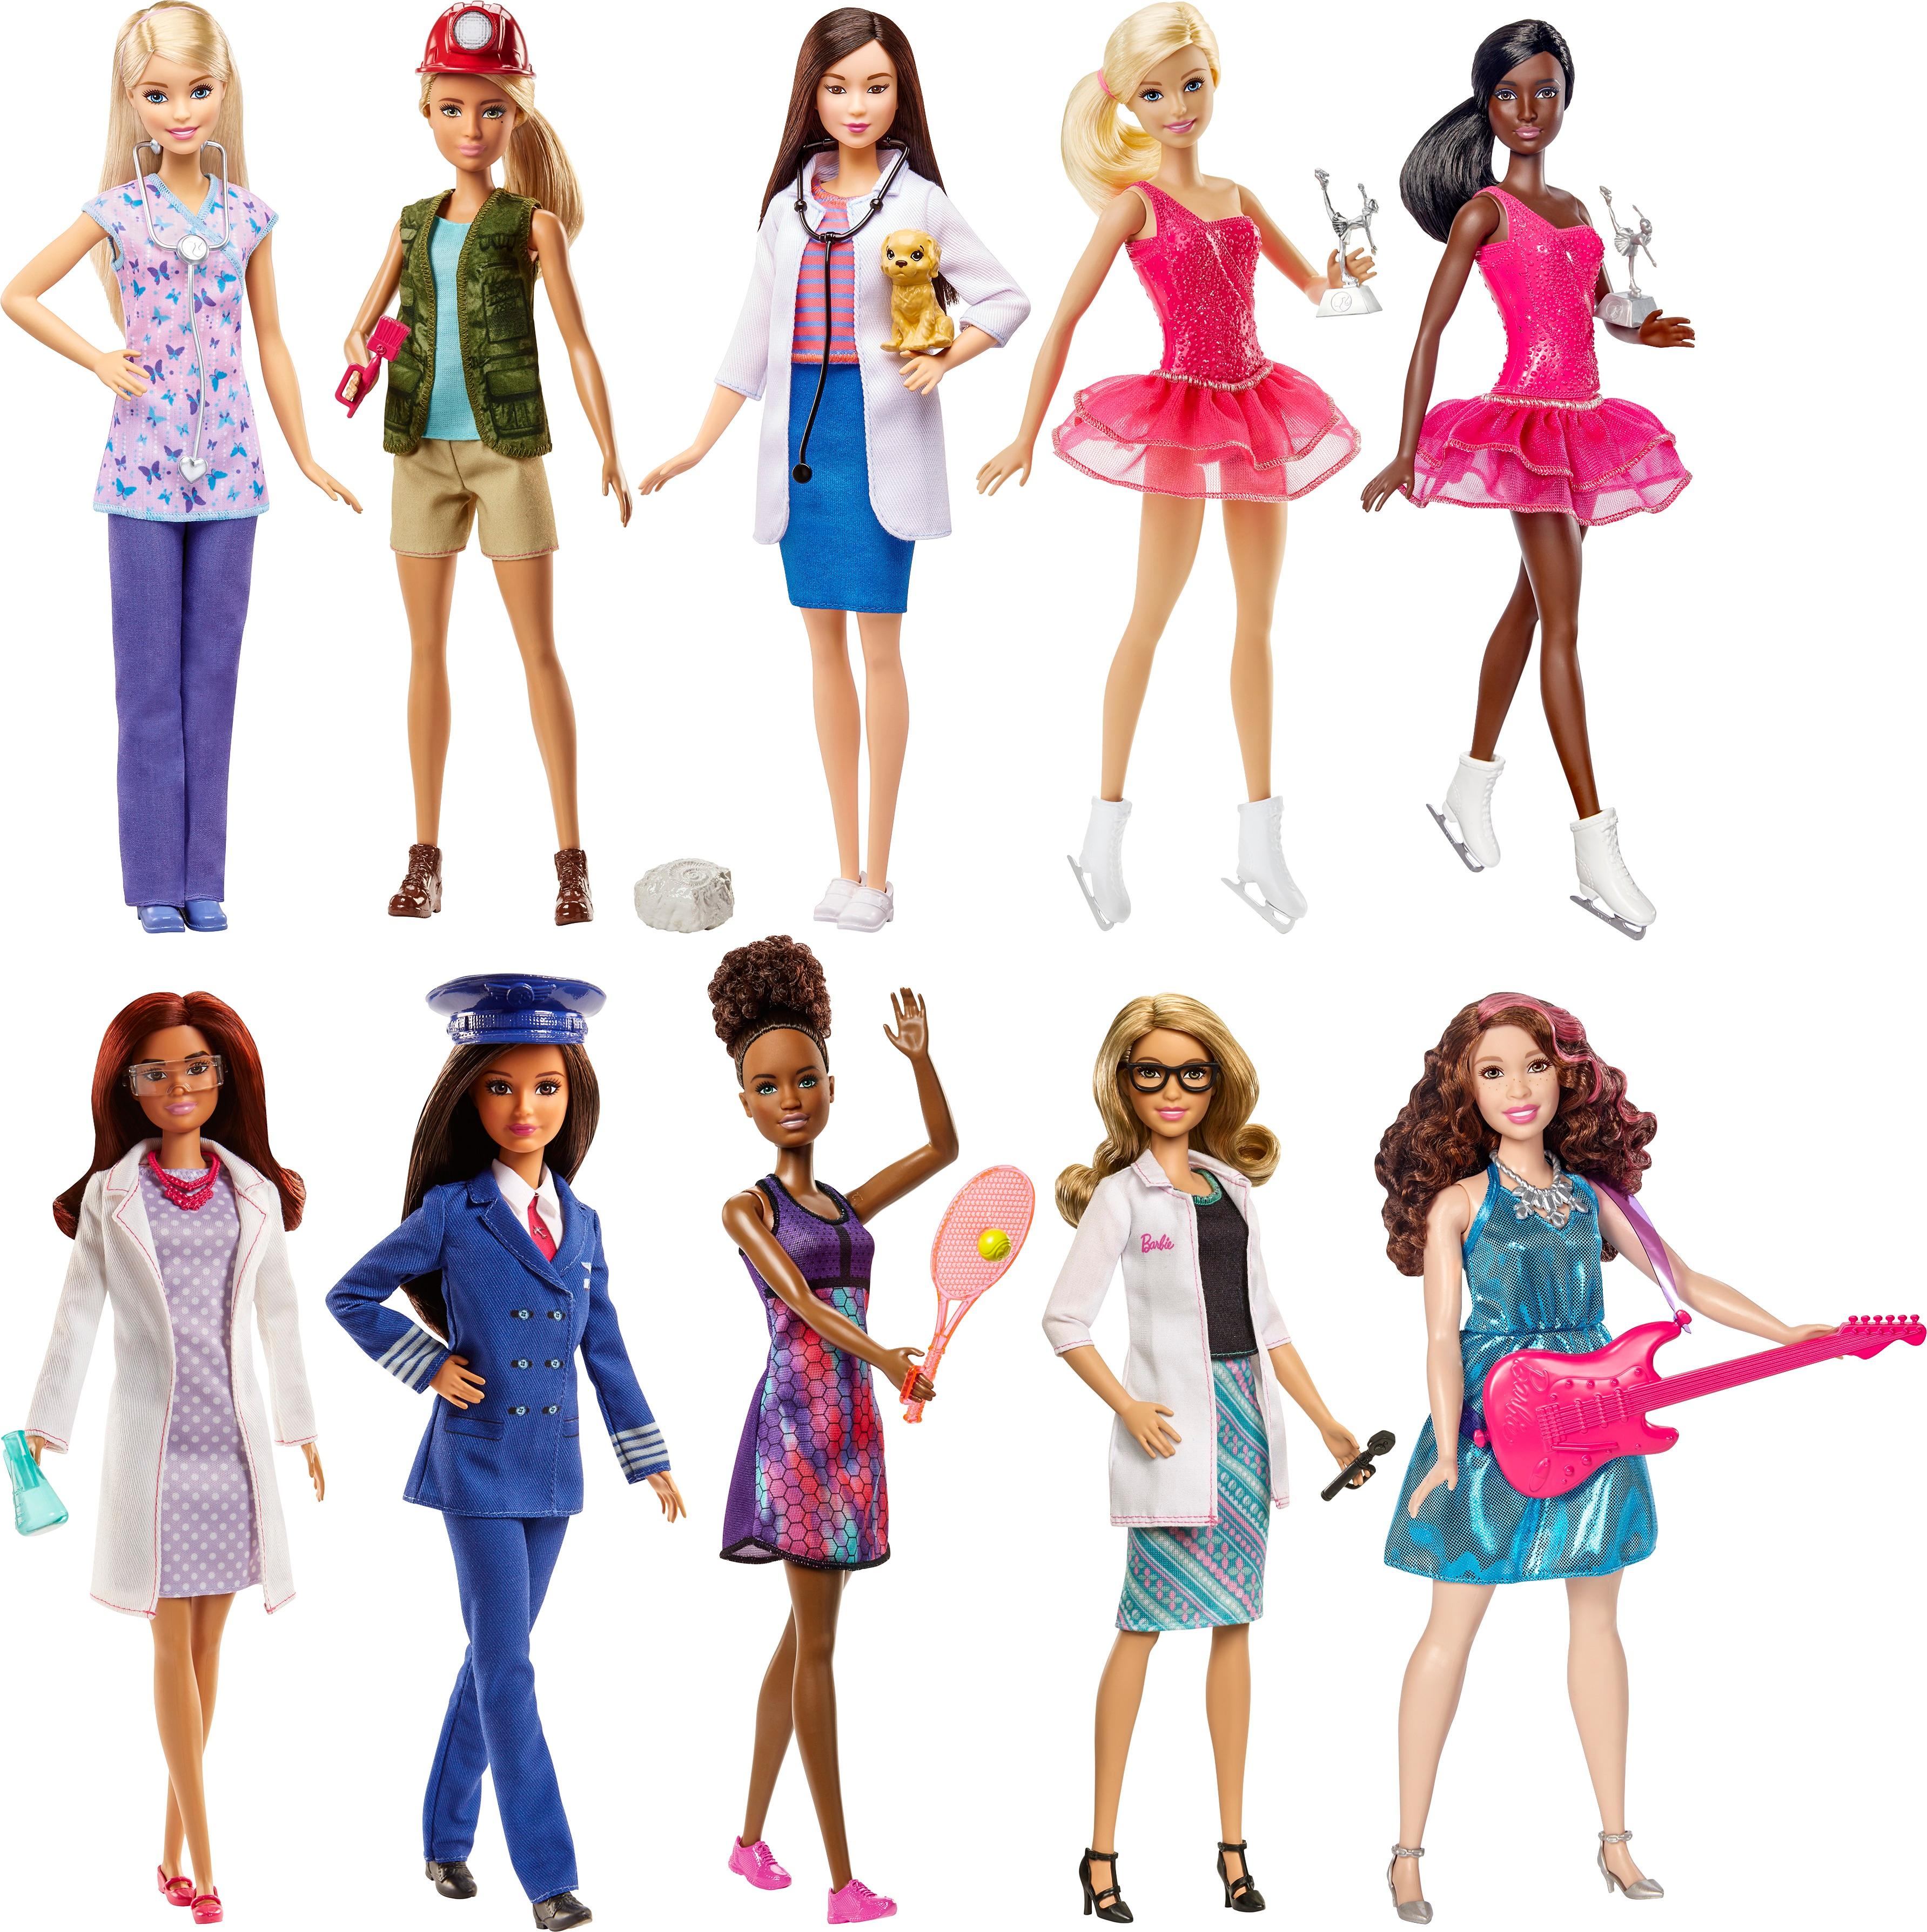 all of barbie's careers